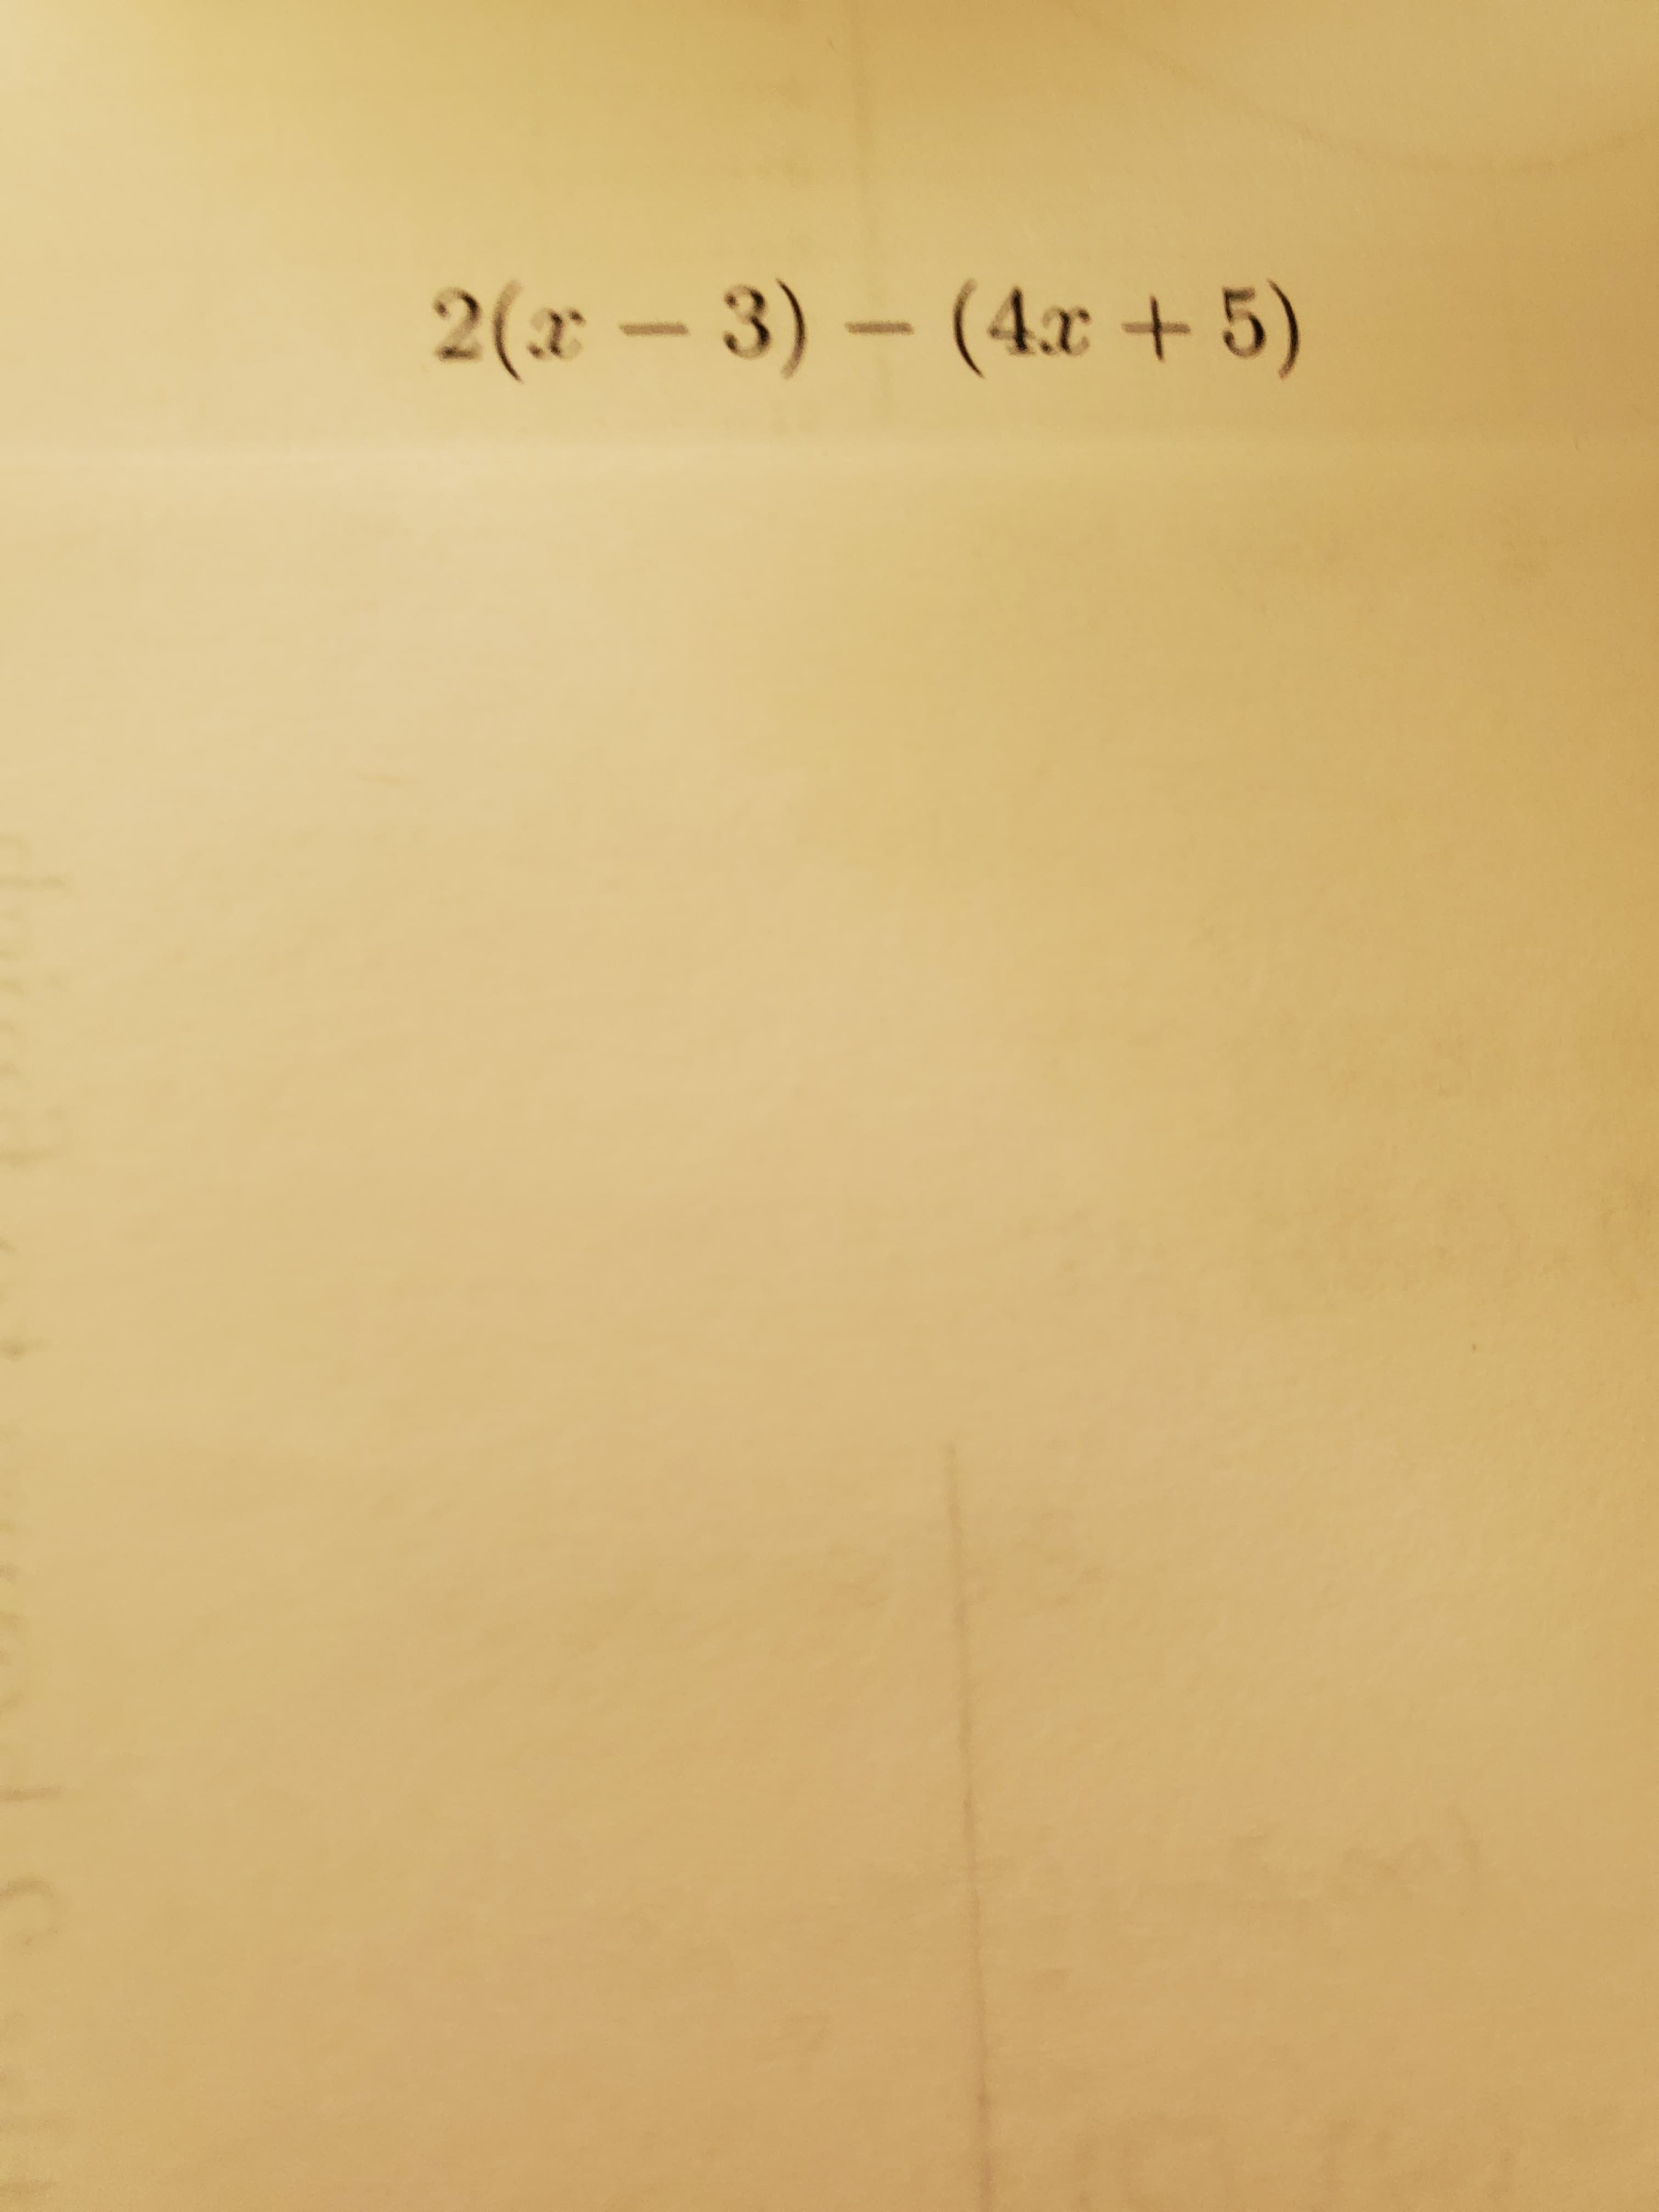 2(x -3) – (4x + 5)
